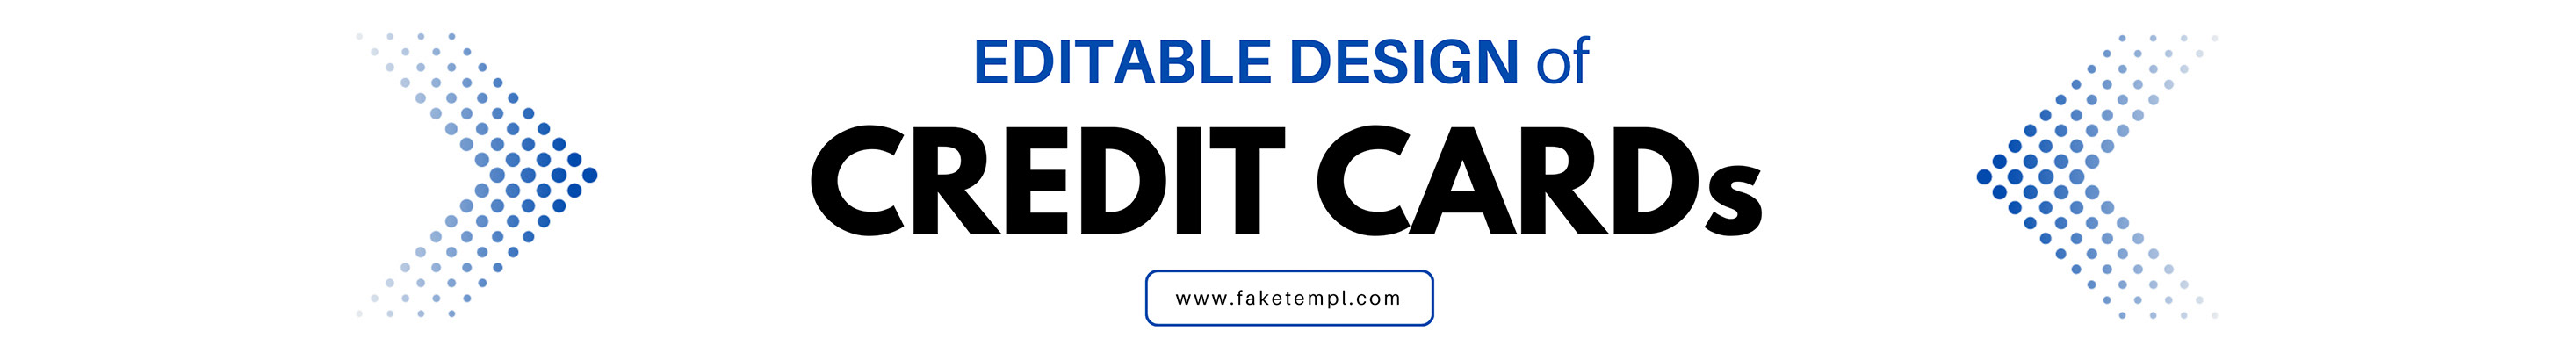 Faketempl Credit card's profile banner